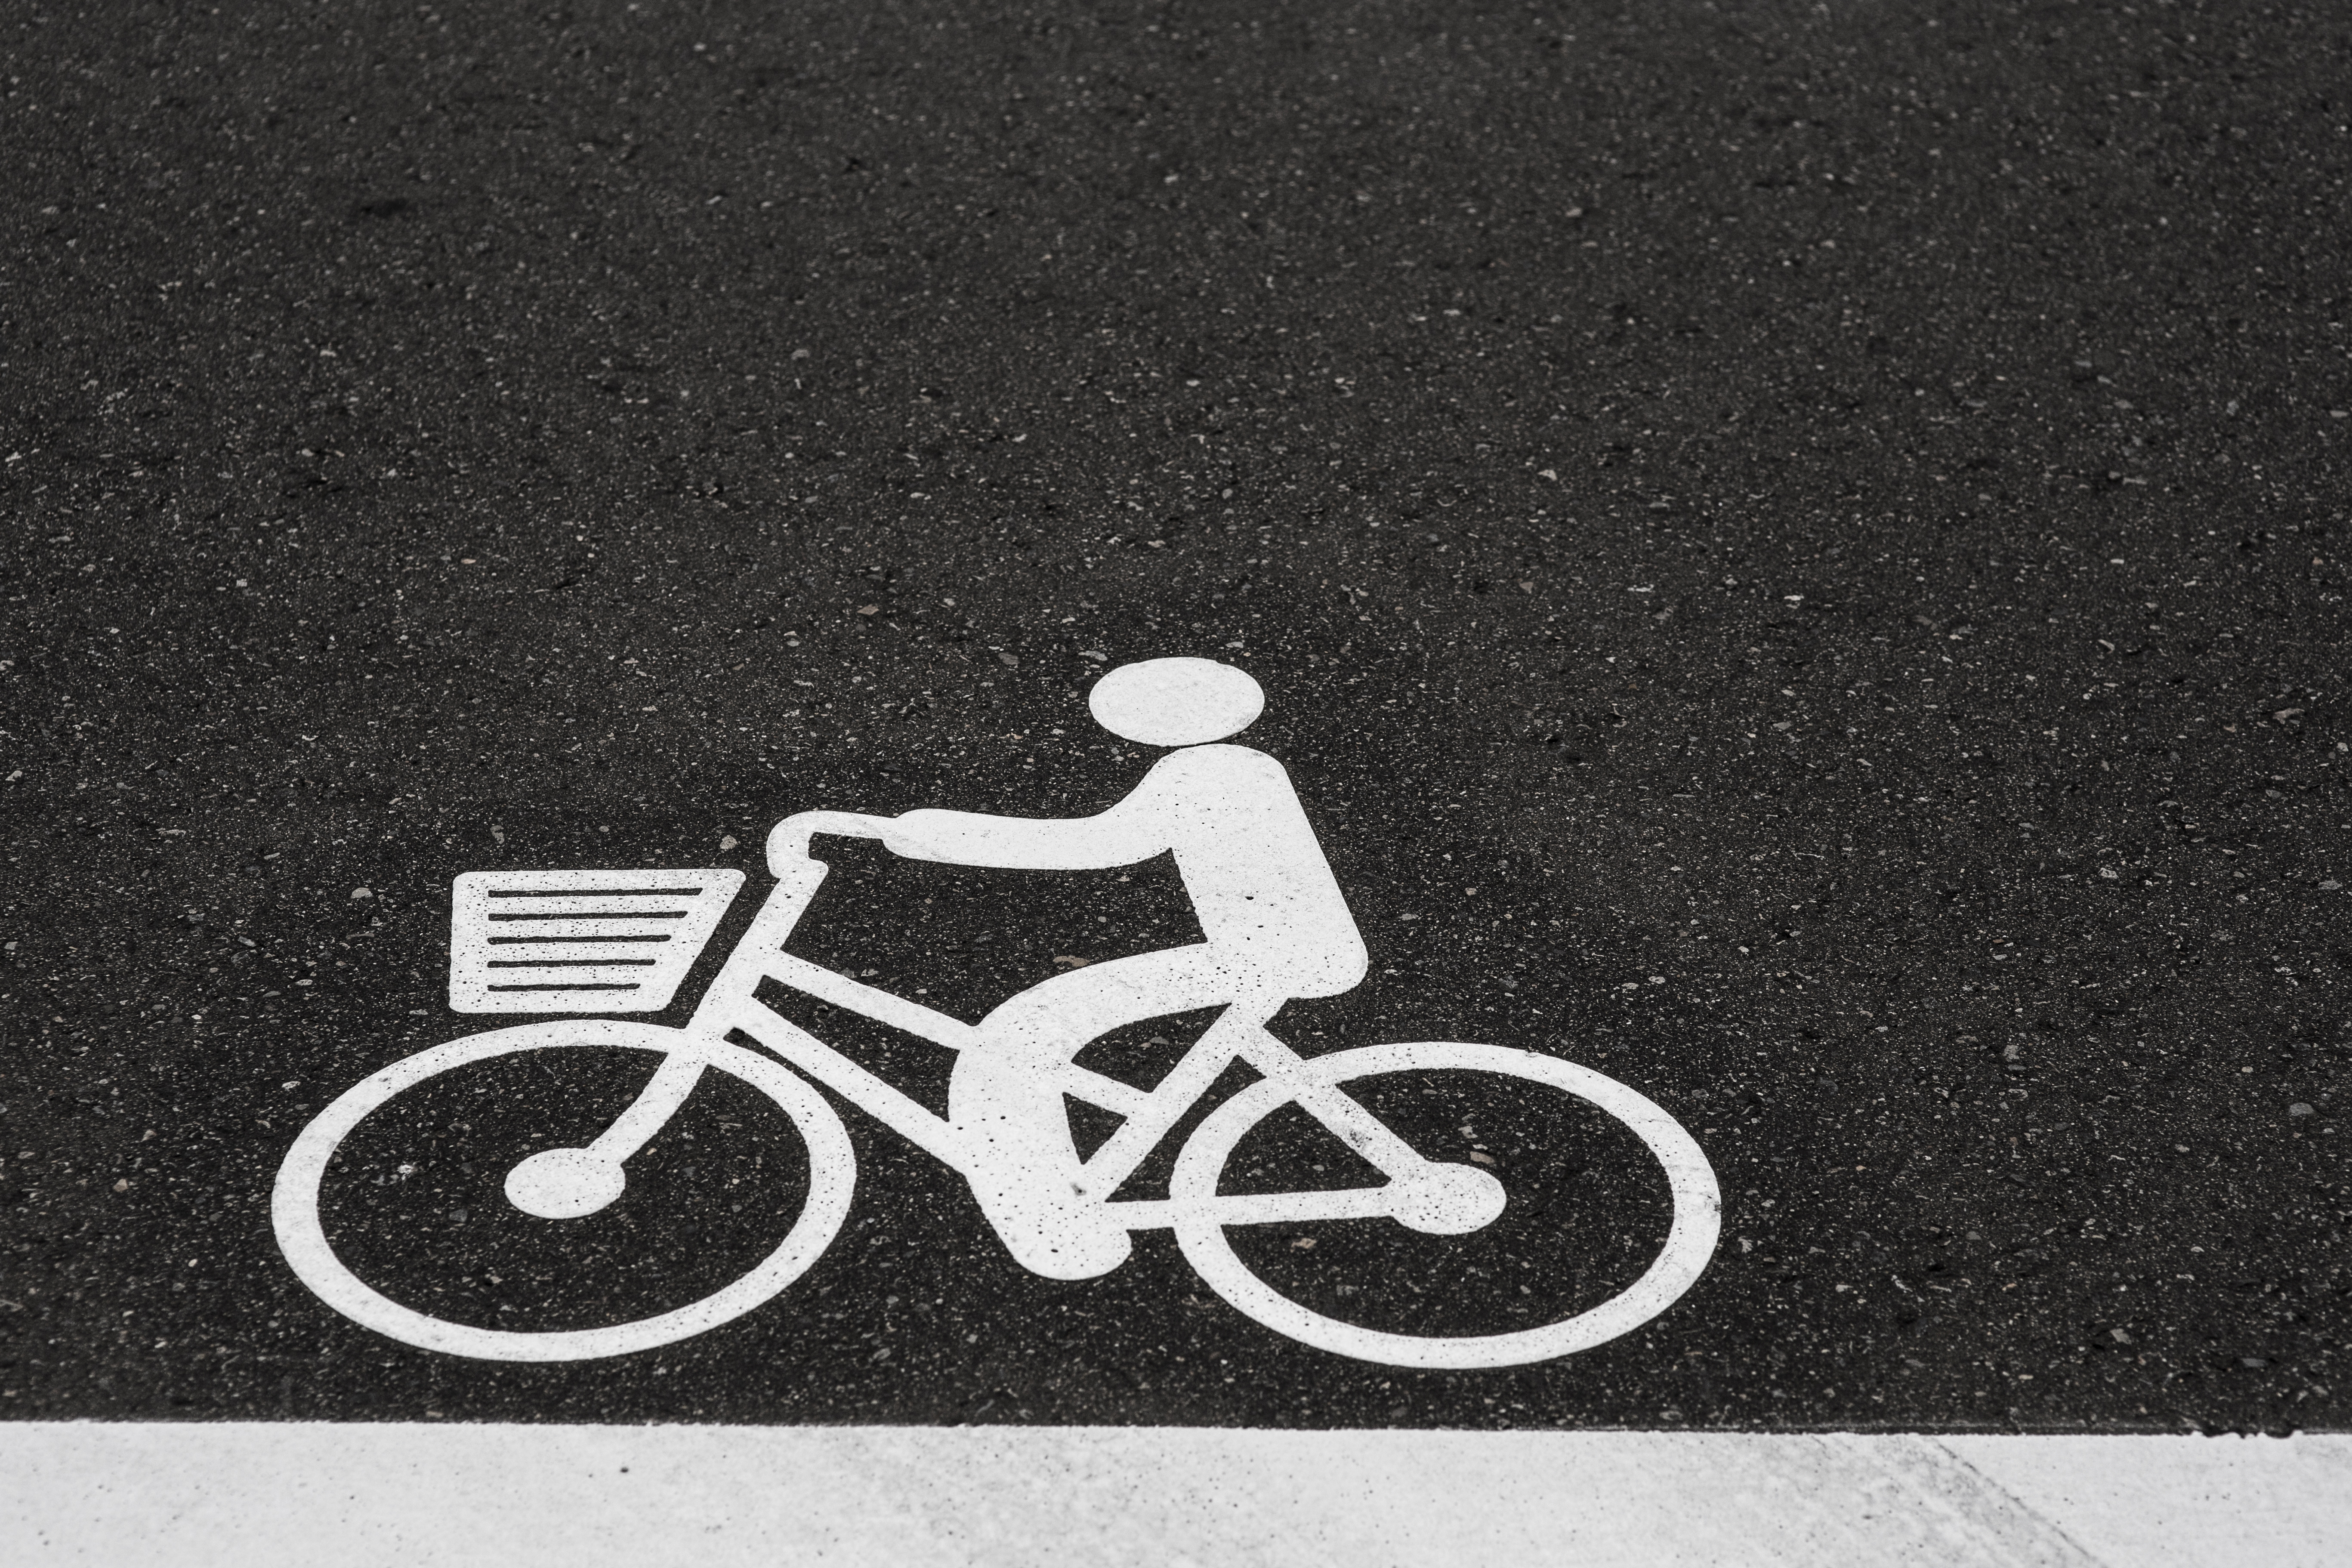 Bike sign logo on the road.